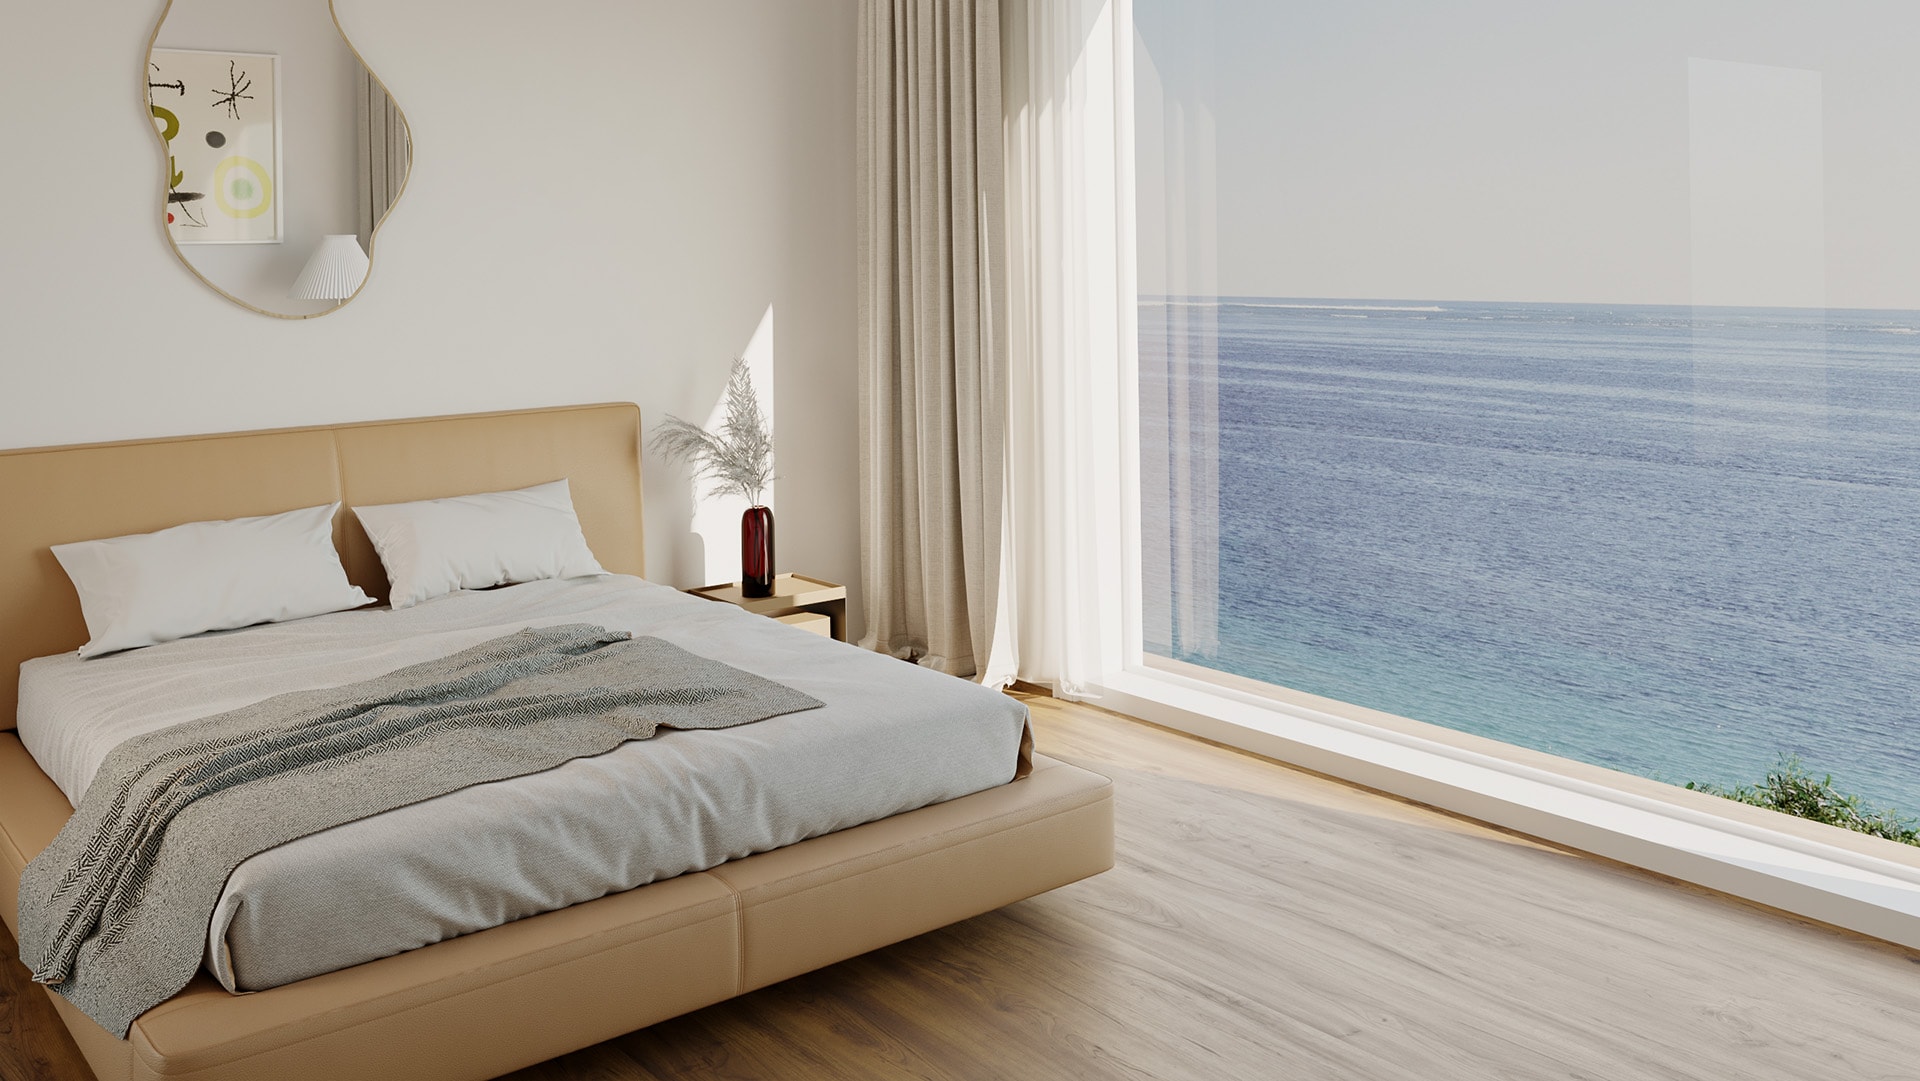 Interior bedroom render with a sea view